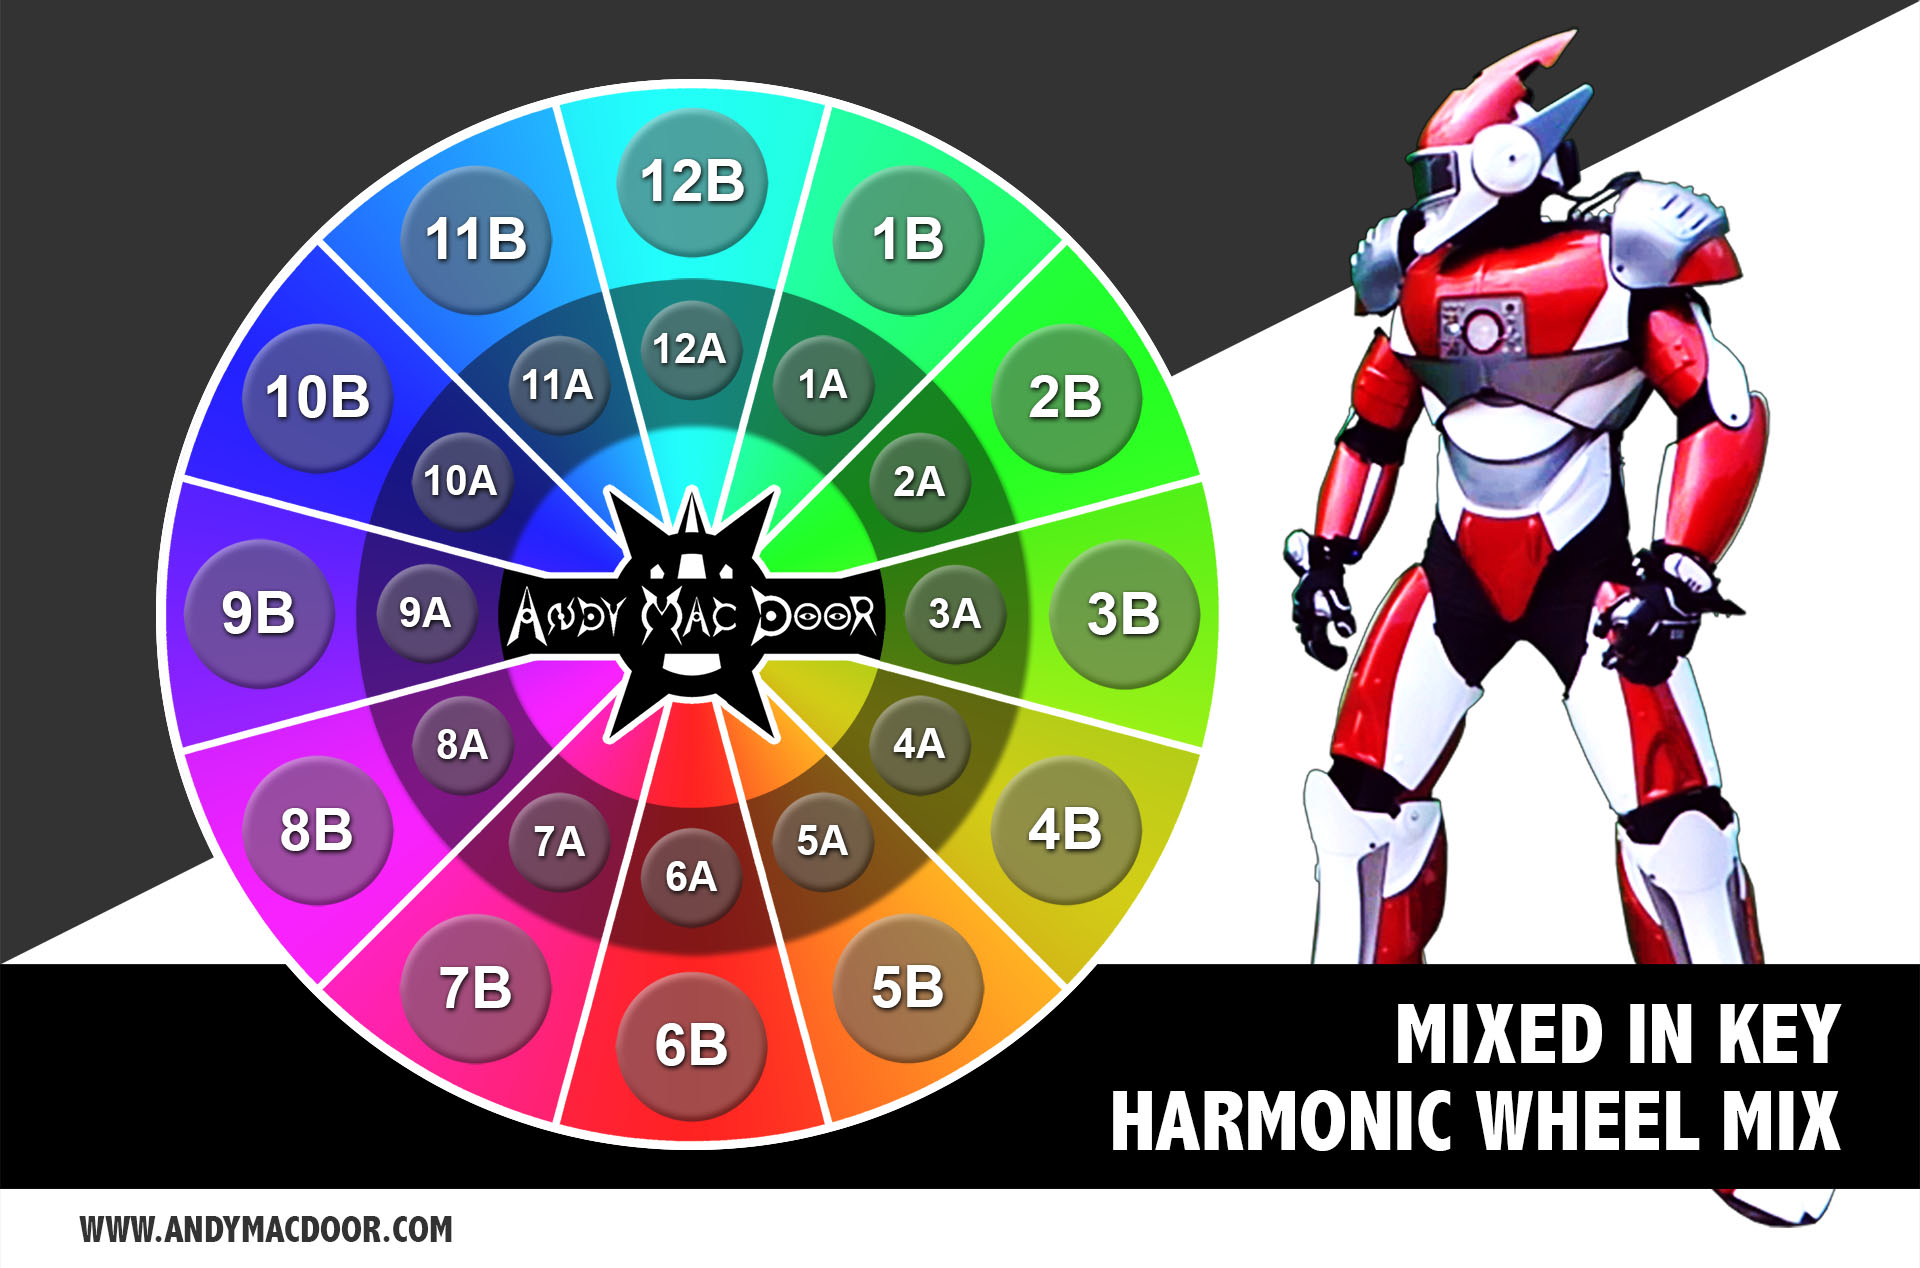 MIXED IN KEY - Harmonic mix wheel schema - Camelot - by Andy Mac Door